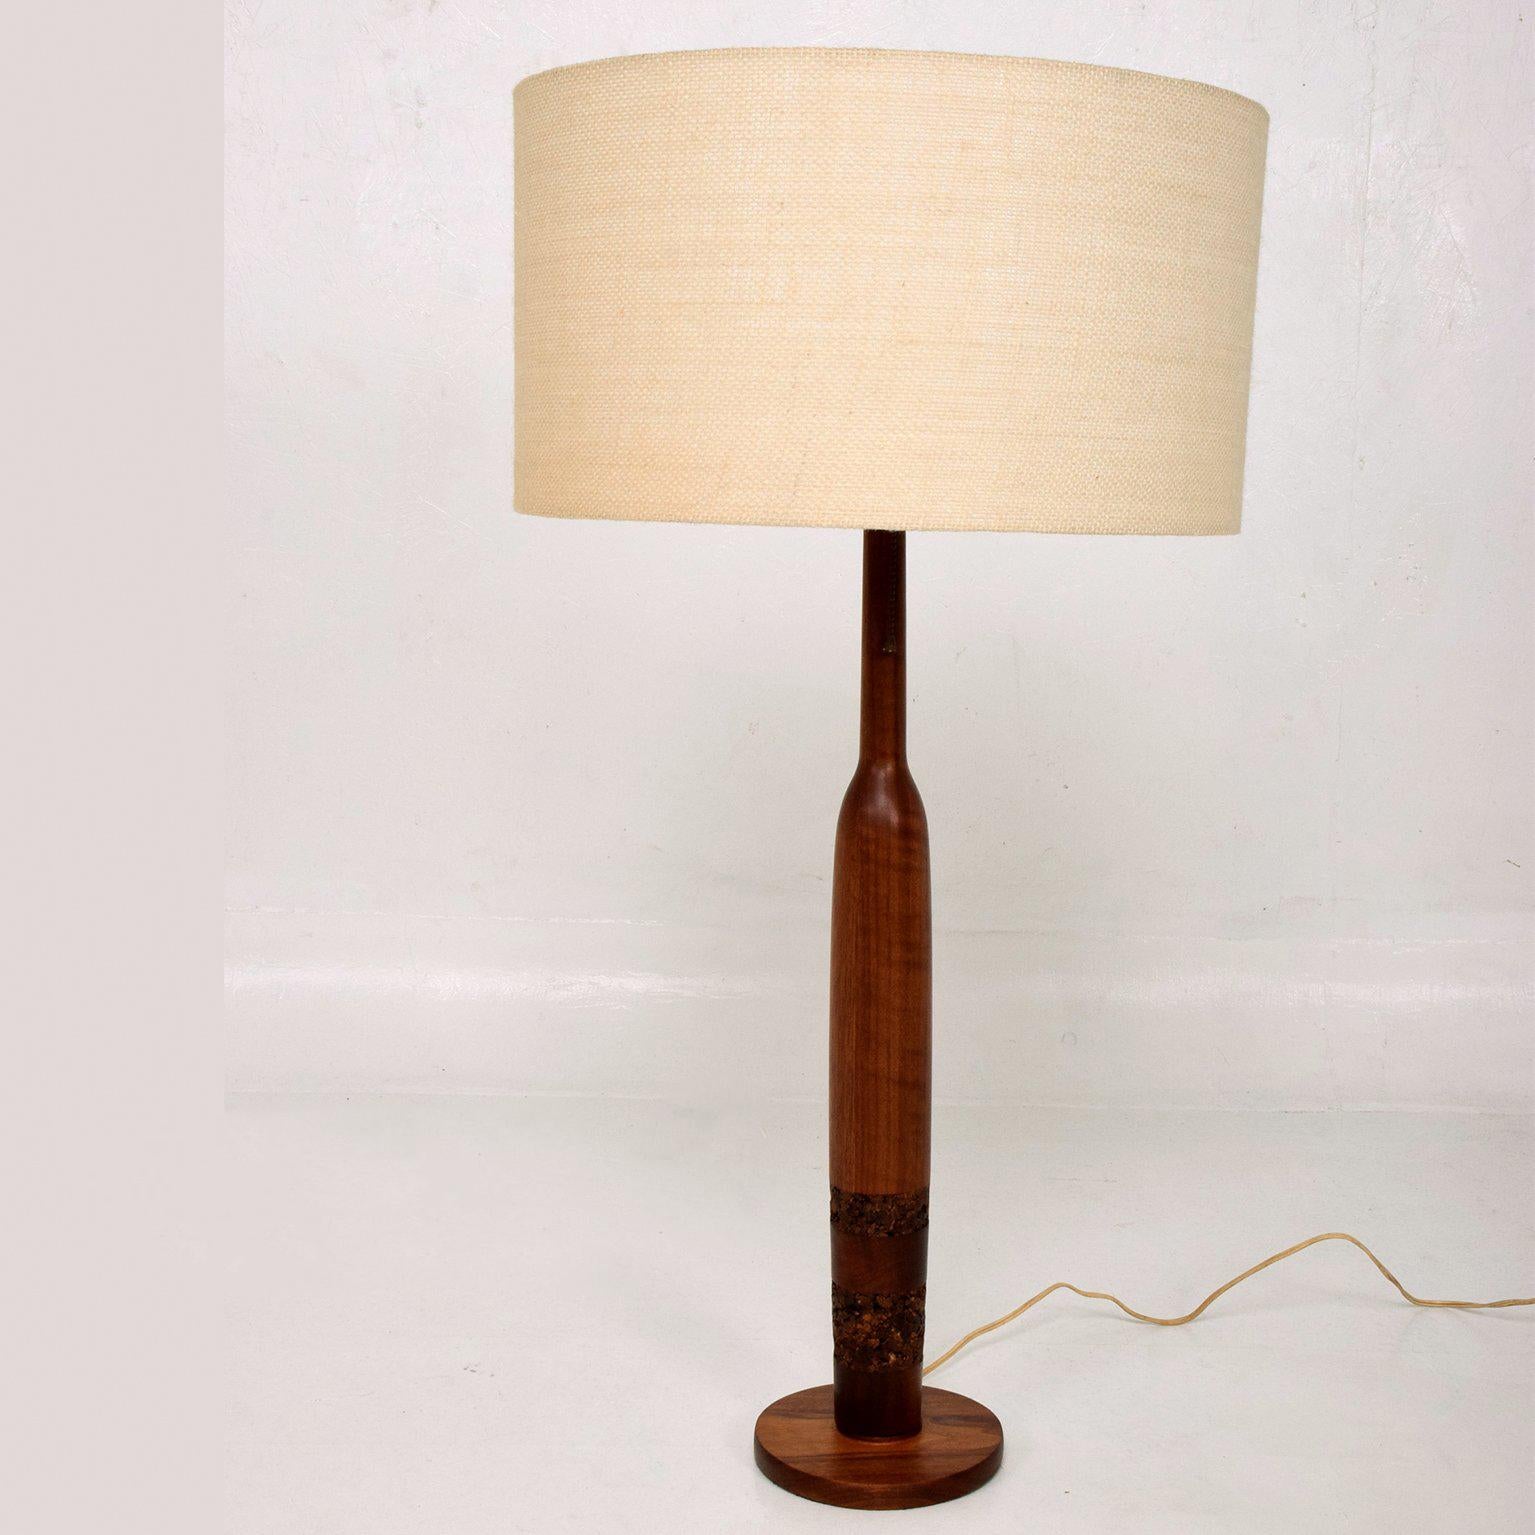 Mid-20th Century Danish Modern Teak and Cork Table Lamp